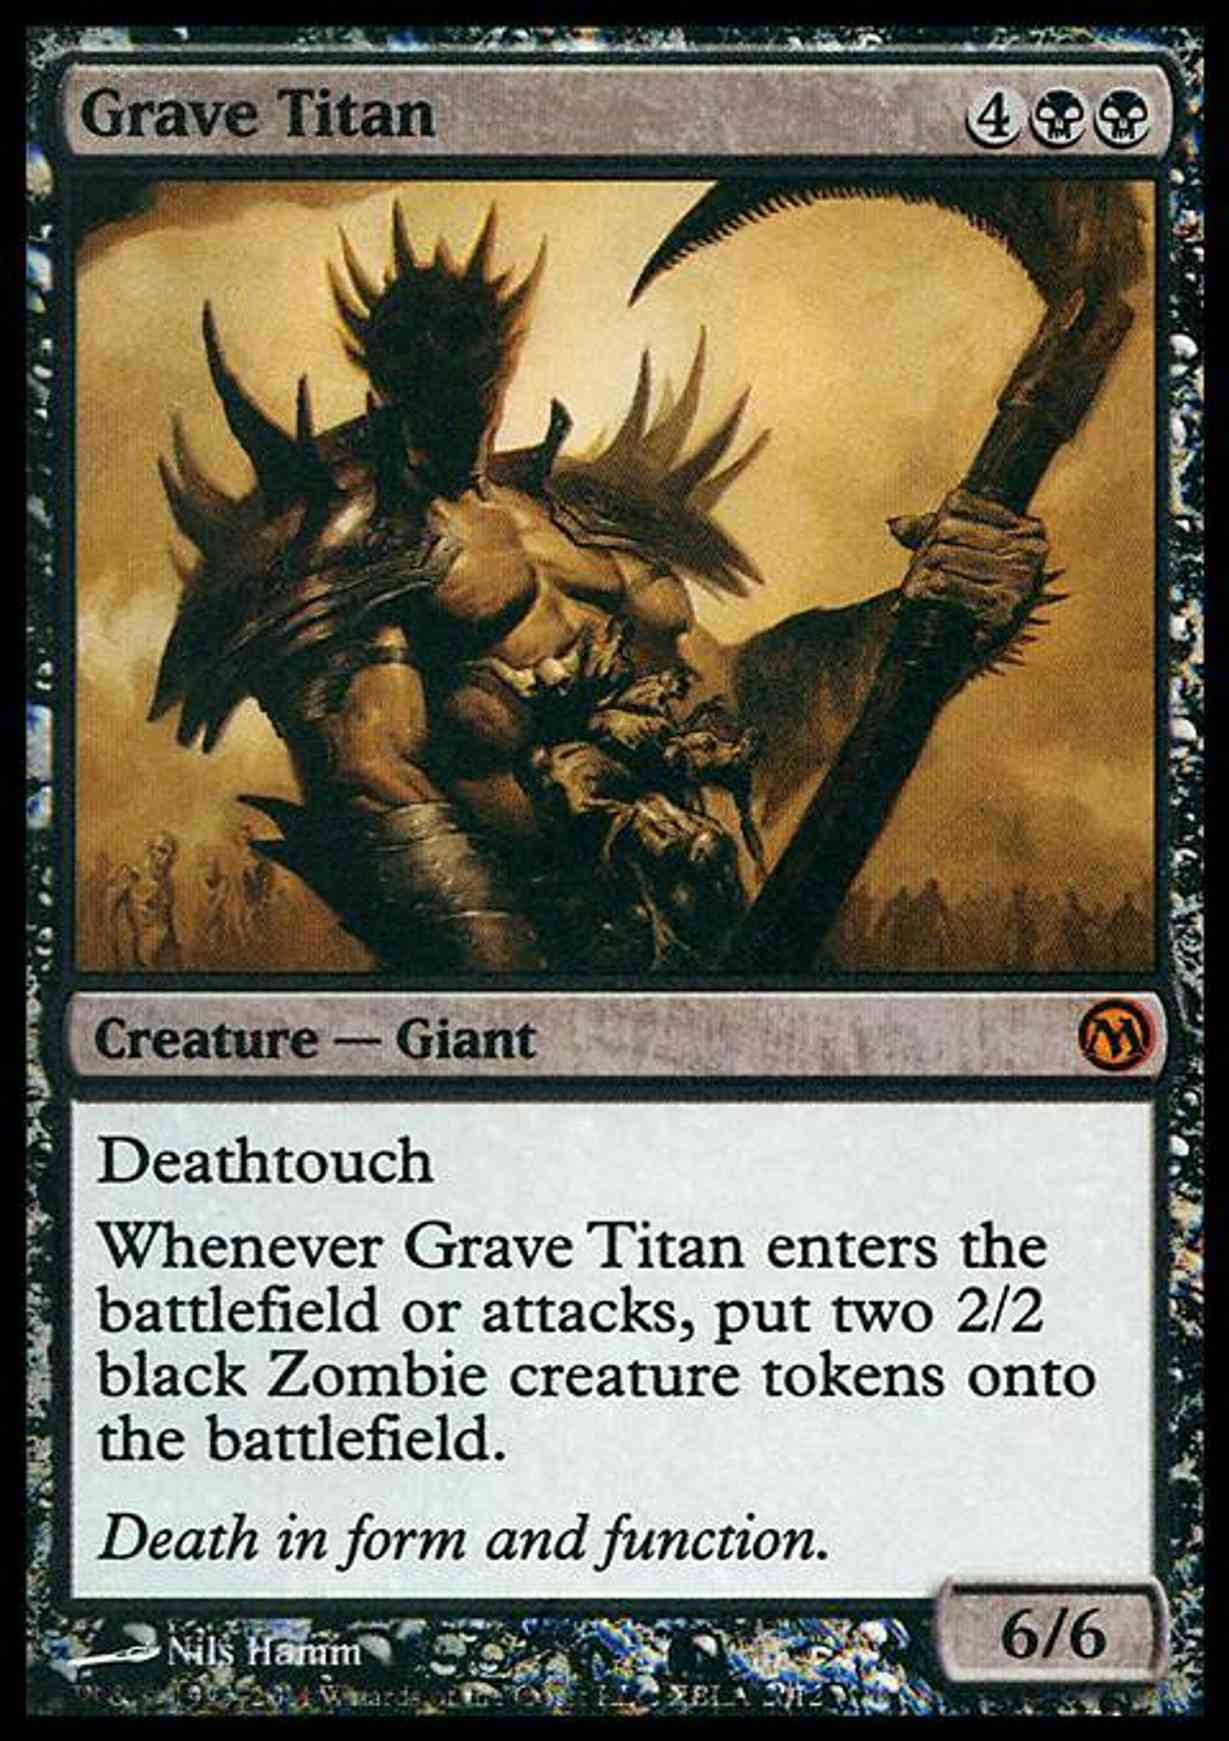 Grave Titan magic card front